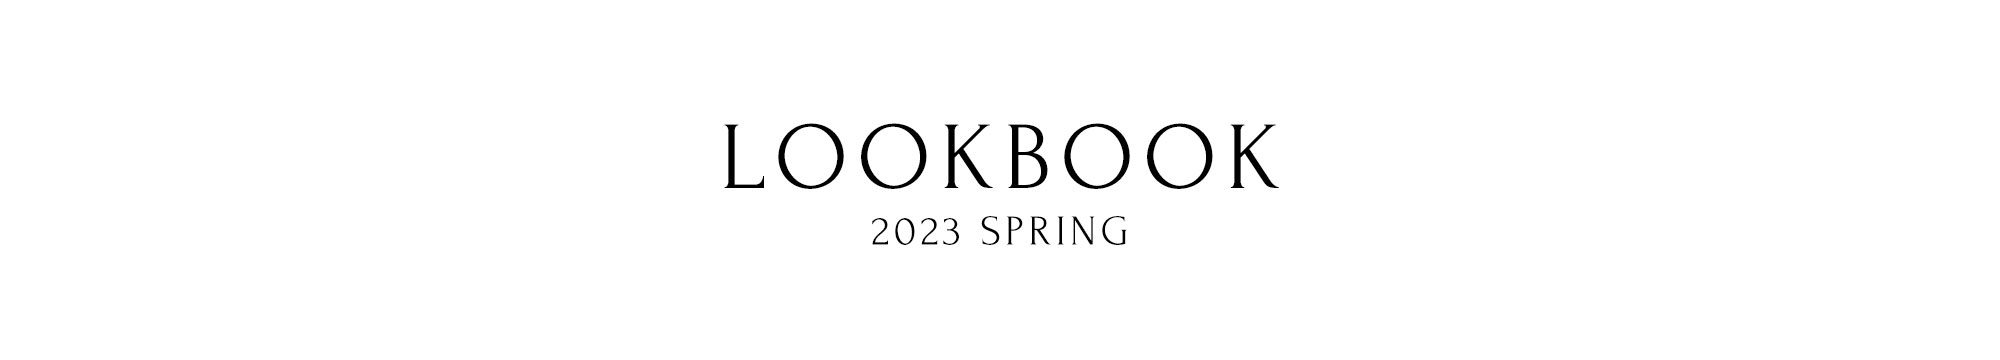 LOOKBOOK2023 SPRING